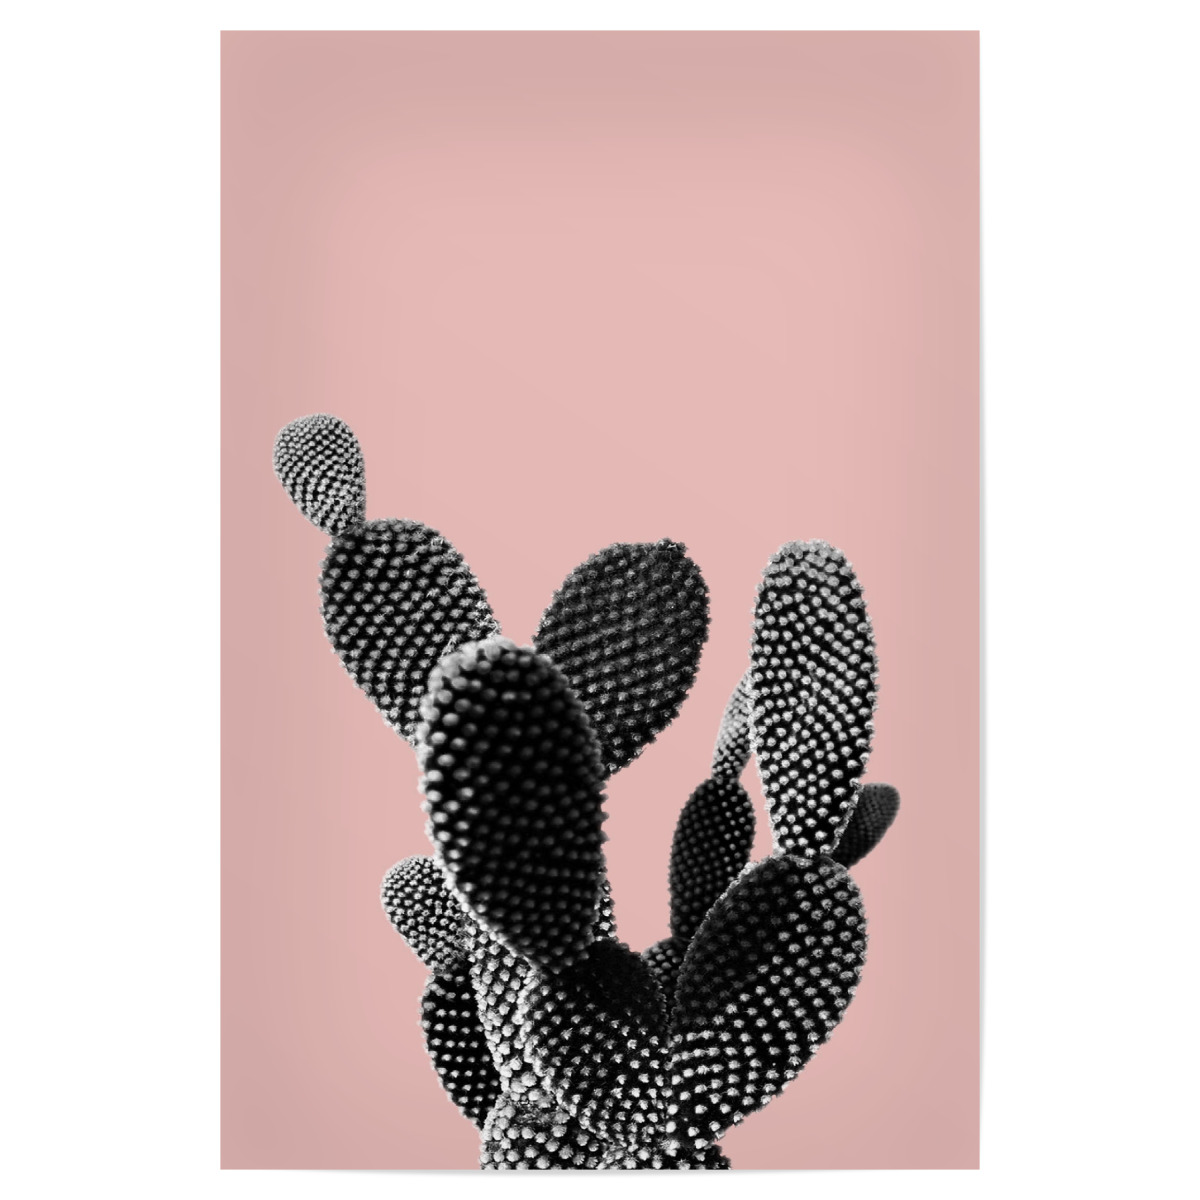 Cacti Collage Als Poster Bei Artboxone Kaufen